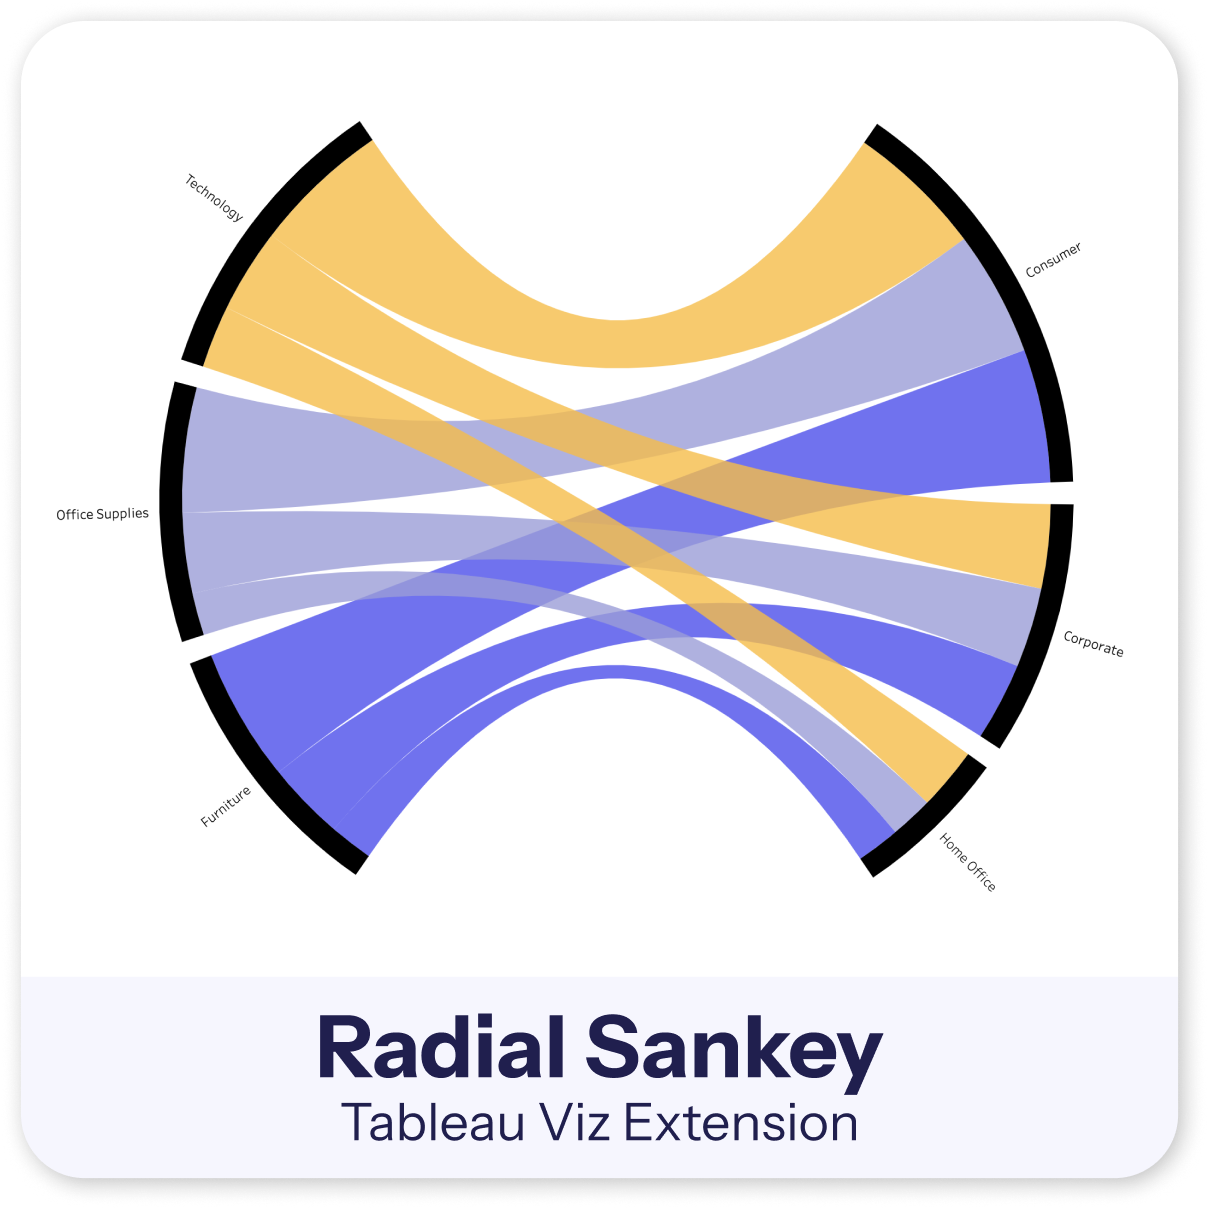 Radial Sankey